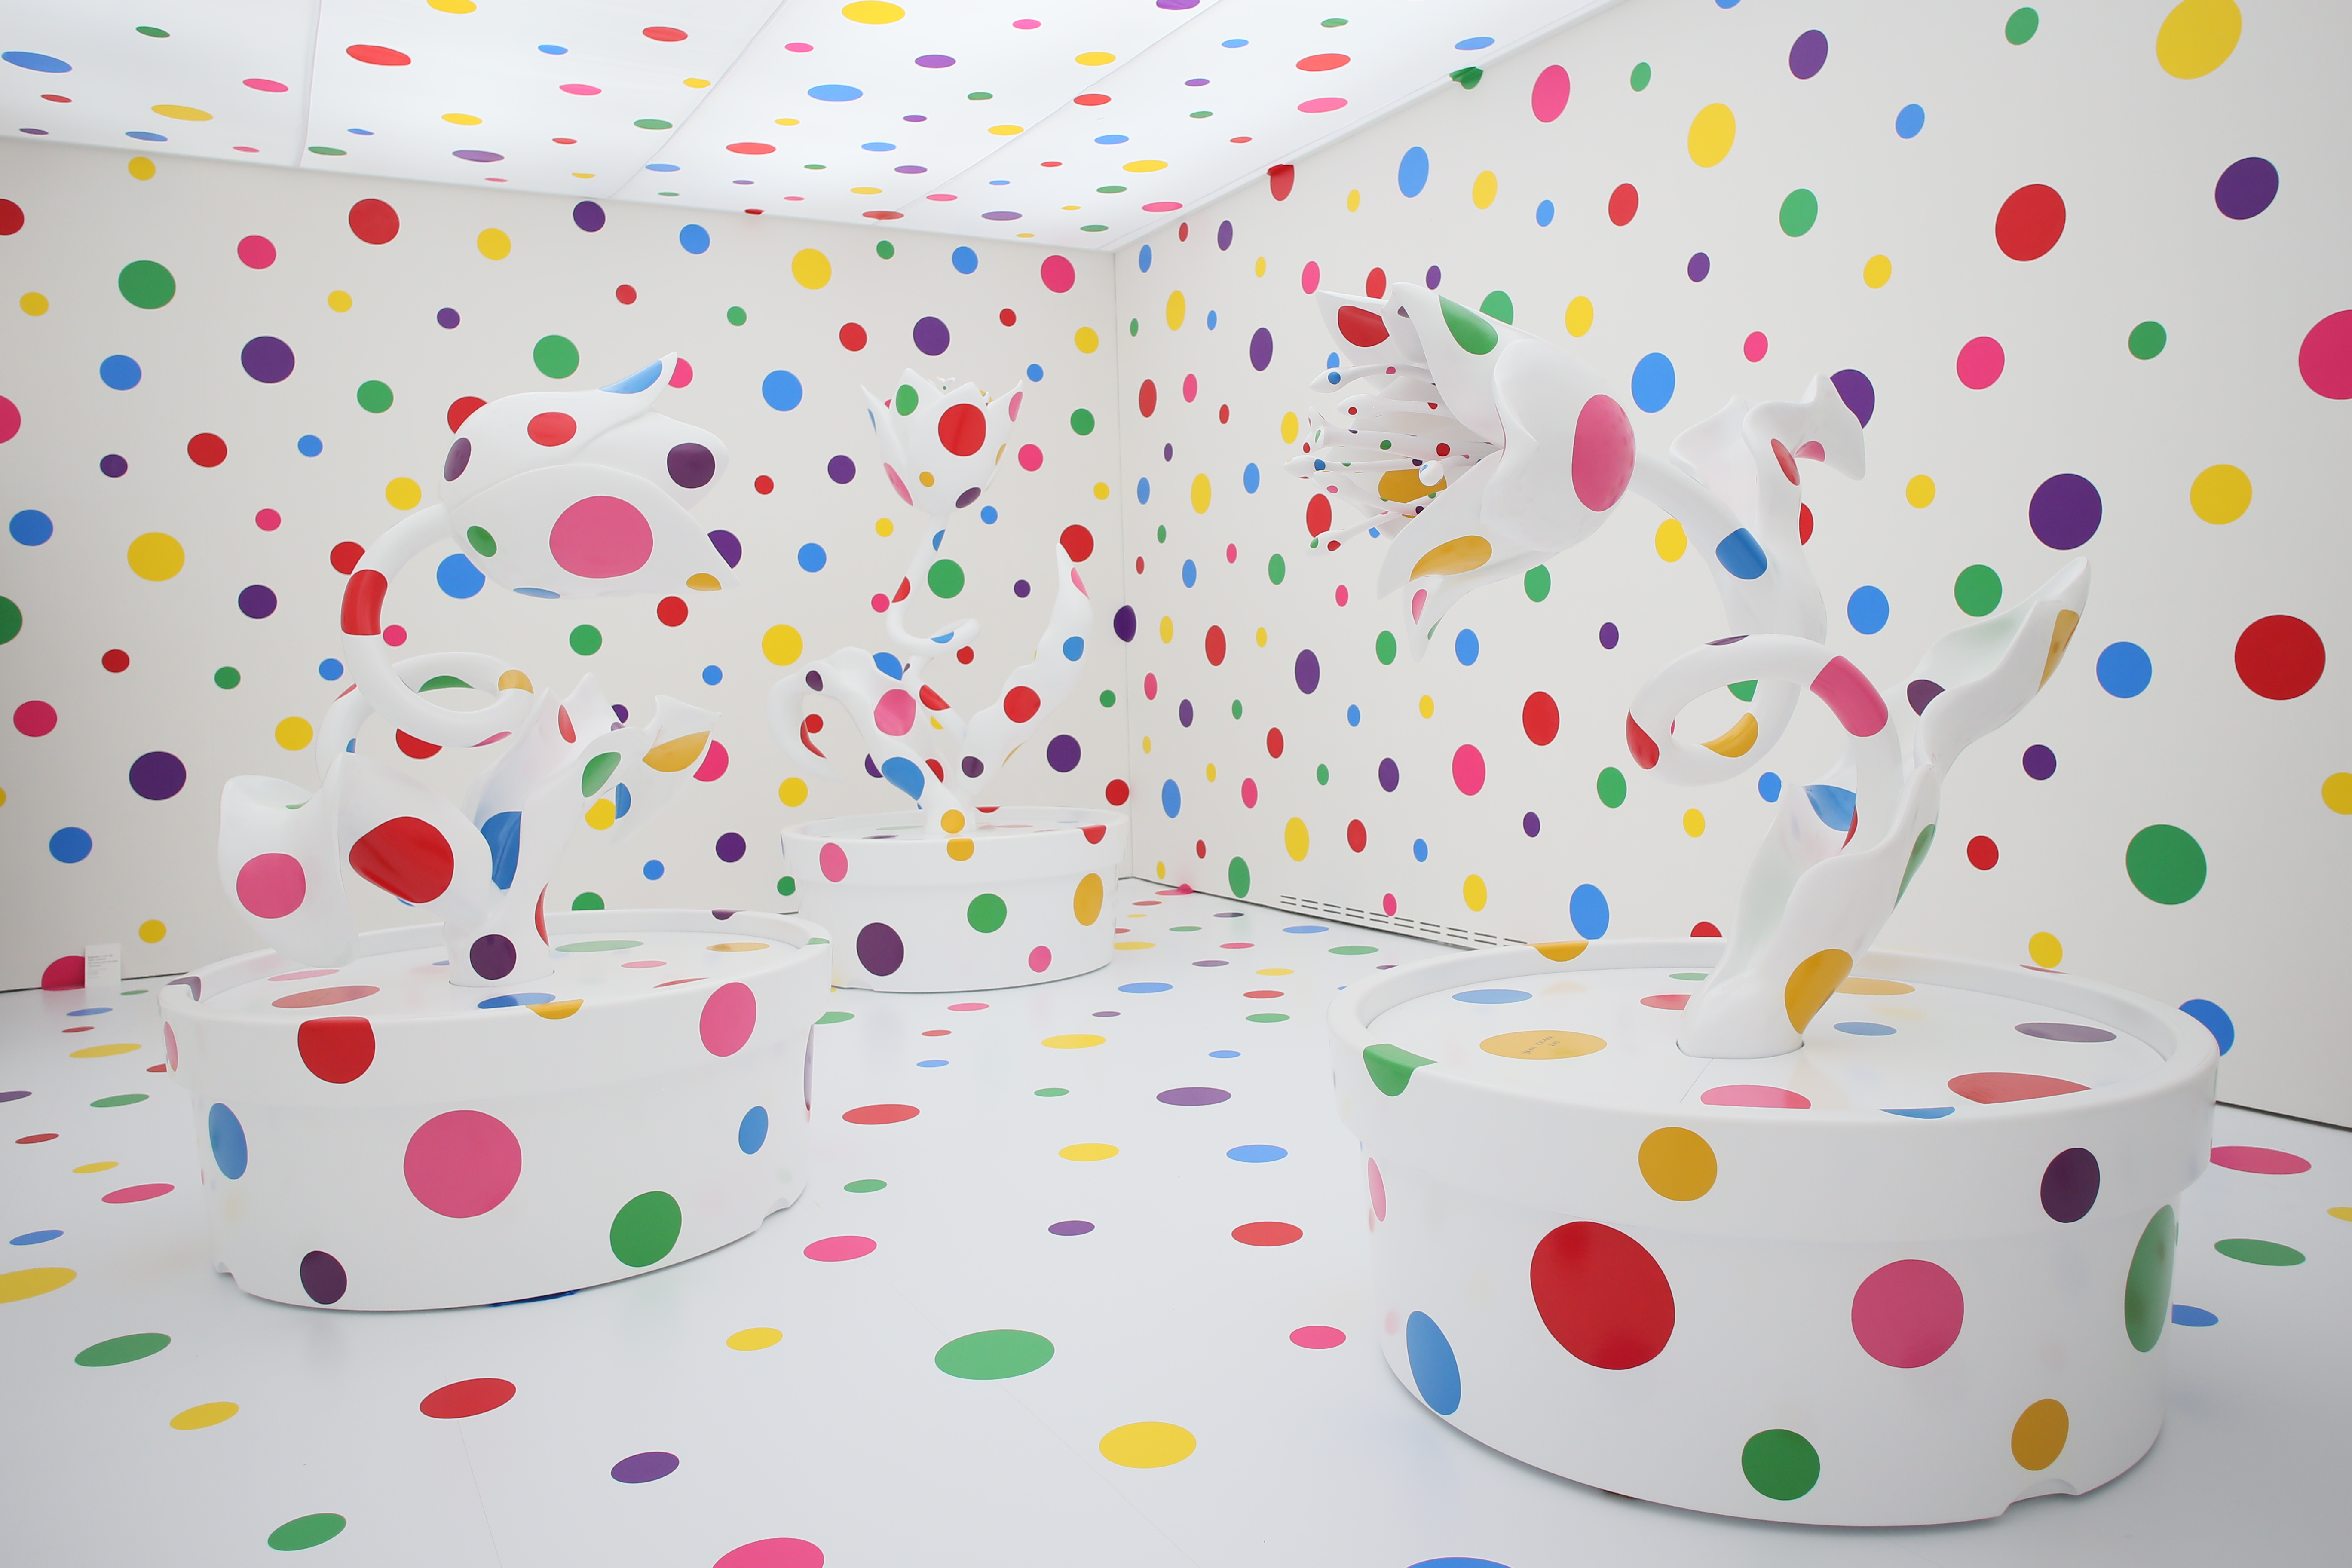 Famed polka-dot artist Yayoi Kusama's wonderfully trippy work is